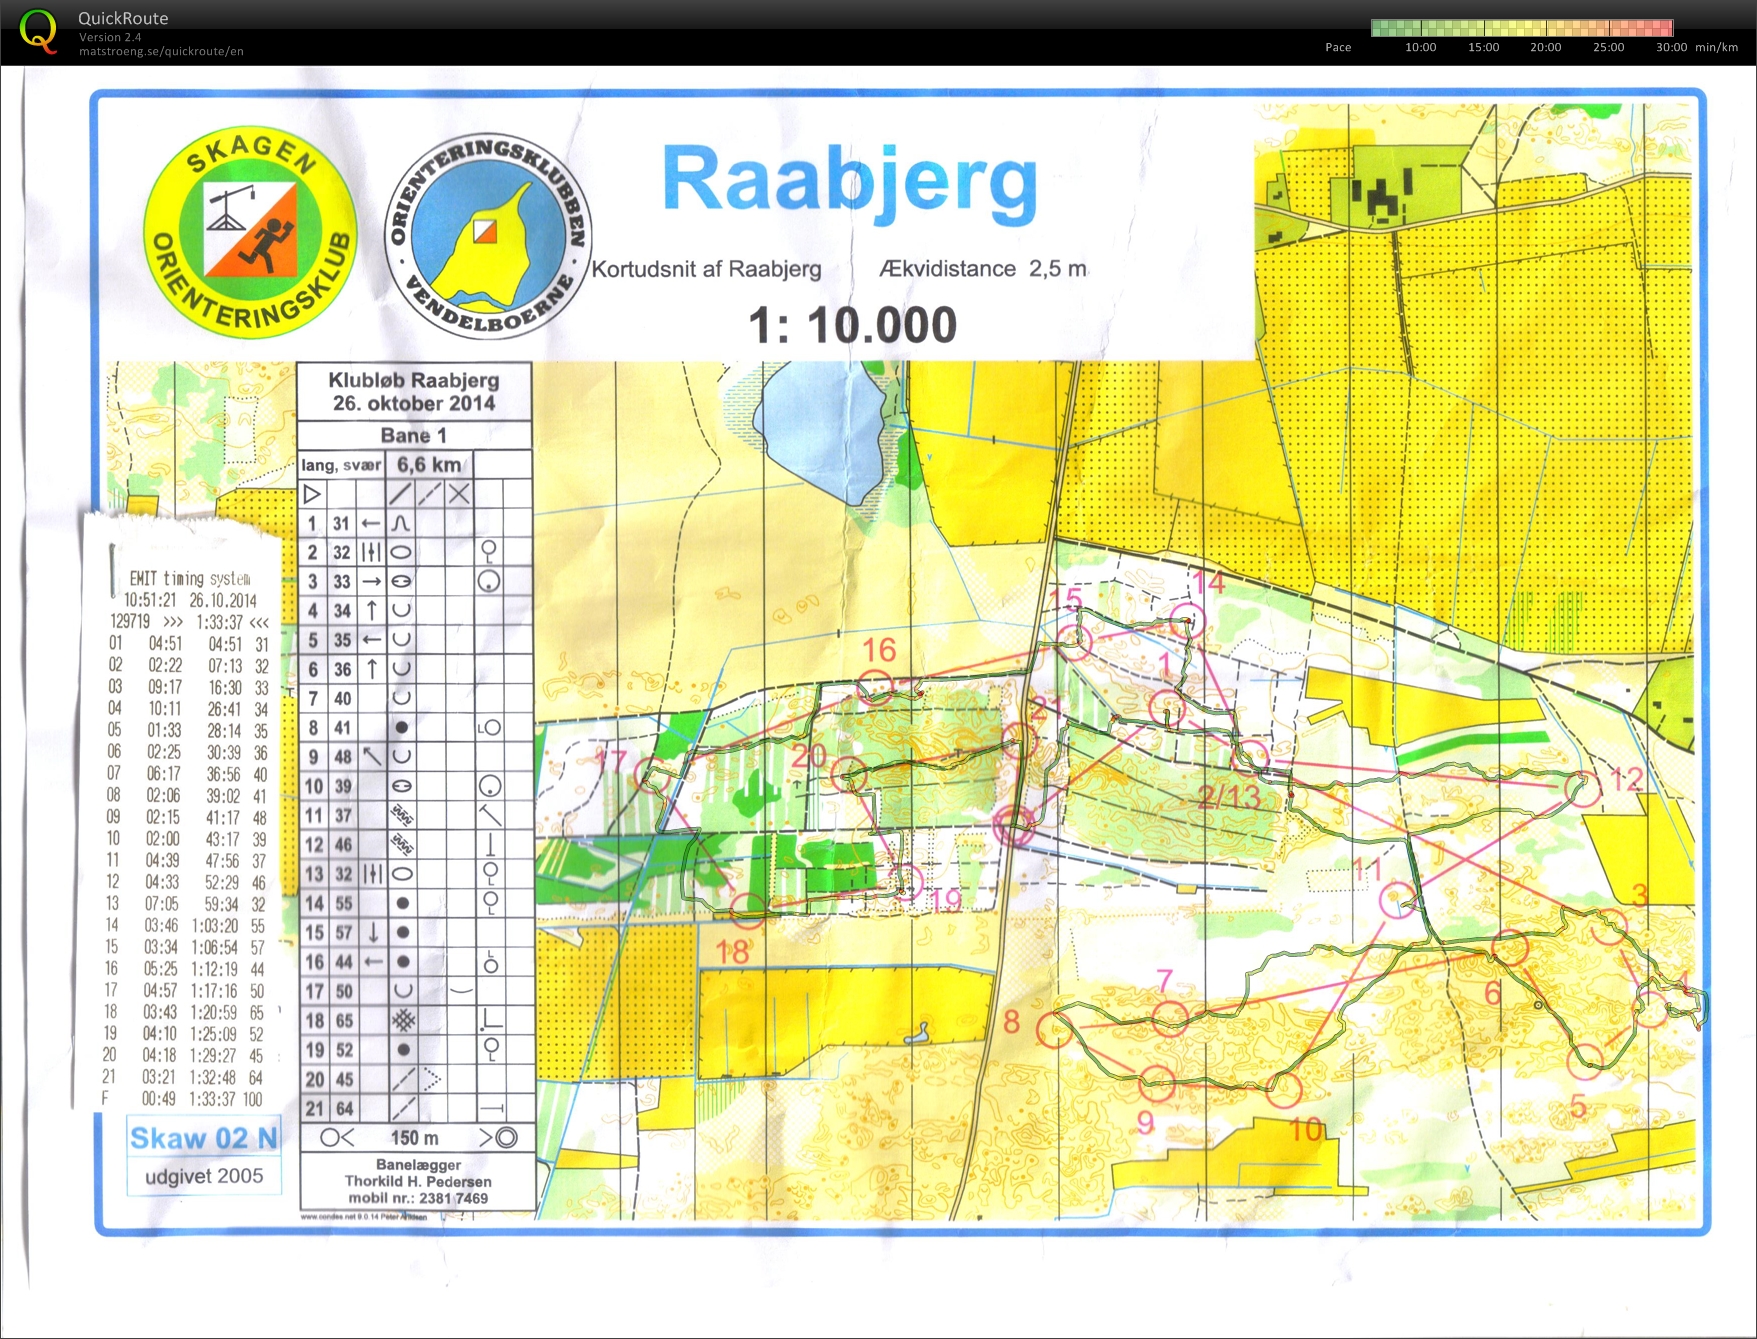 Raabjerg (27-10-2014)